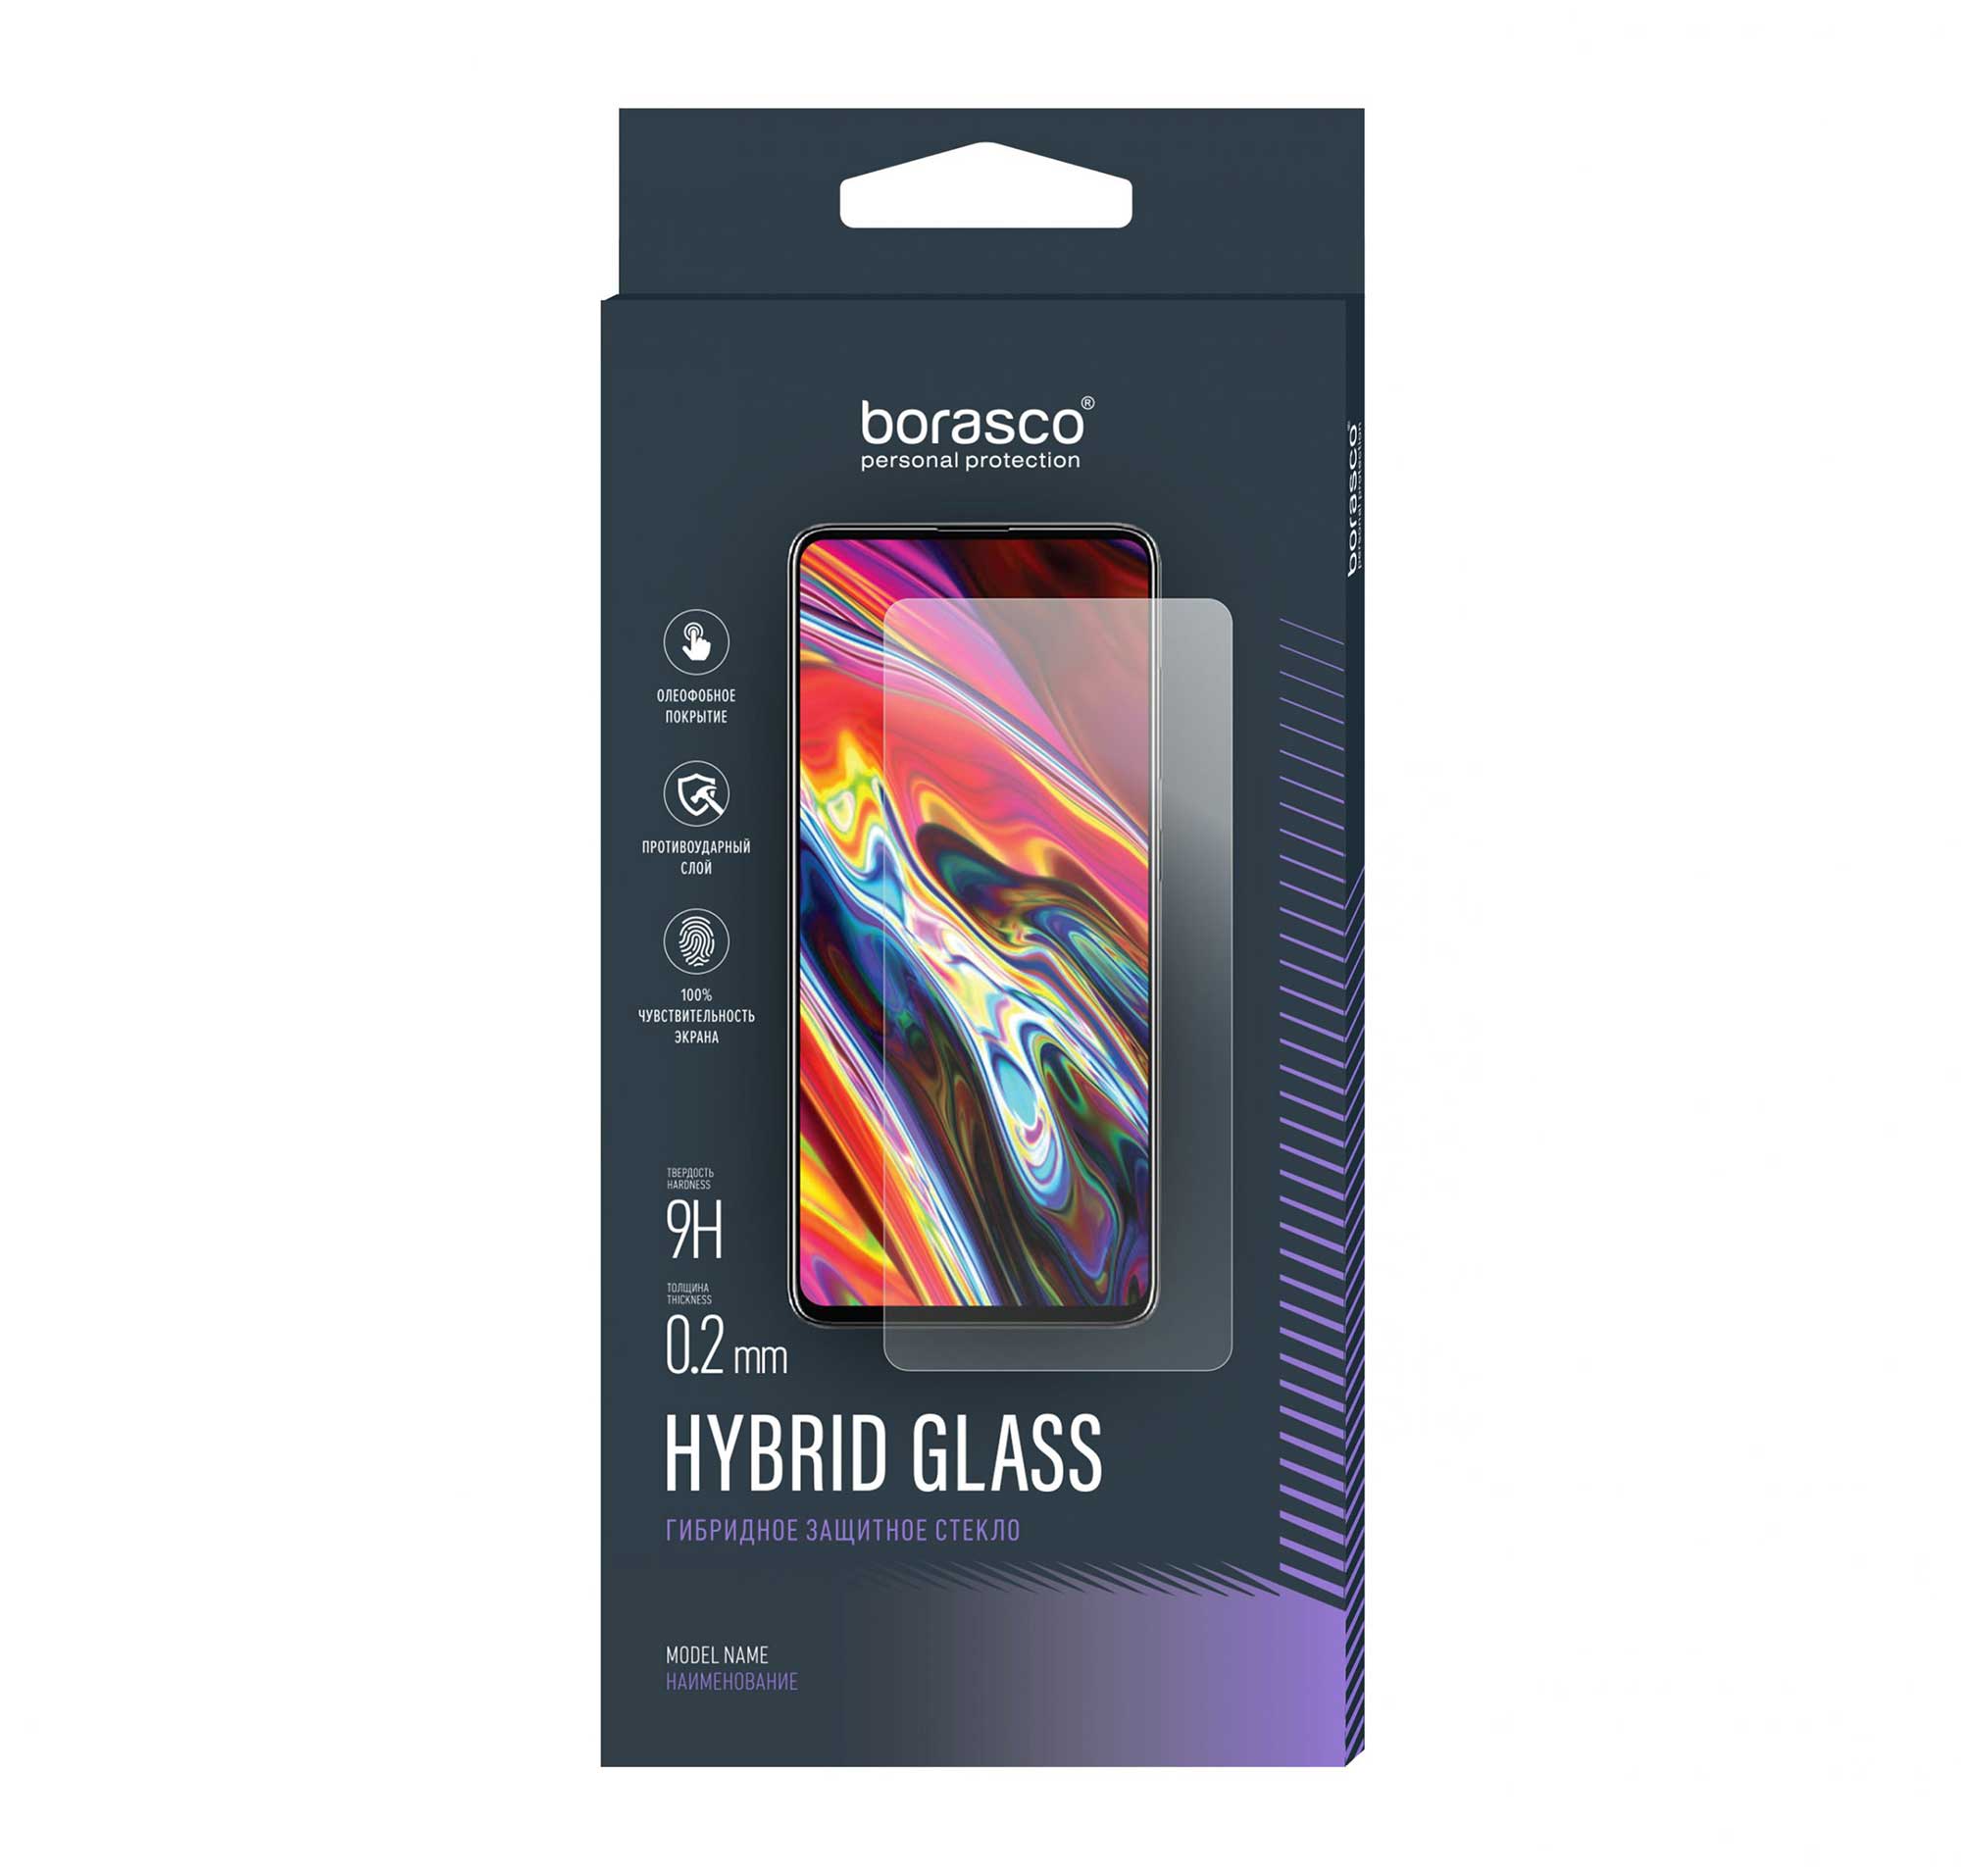 Защитное стекло Hybrid Glass для Itel A25 защитное стекло hybrid glass для itel a25